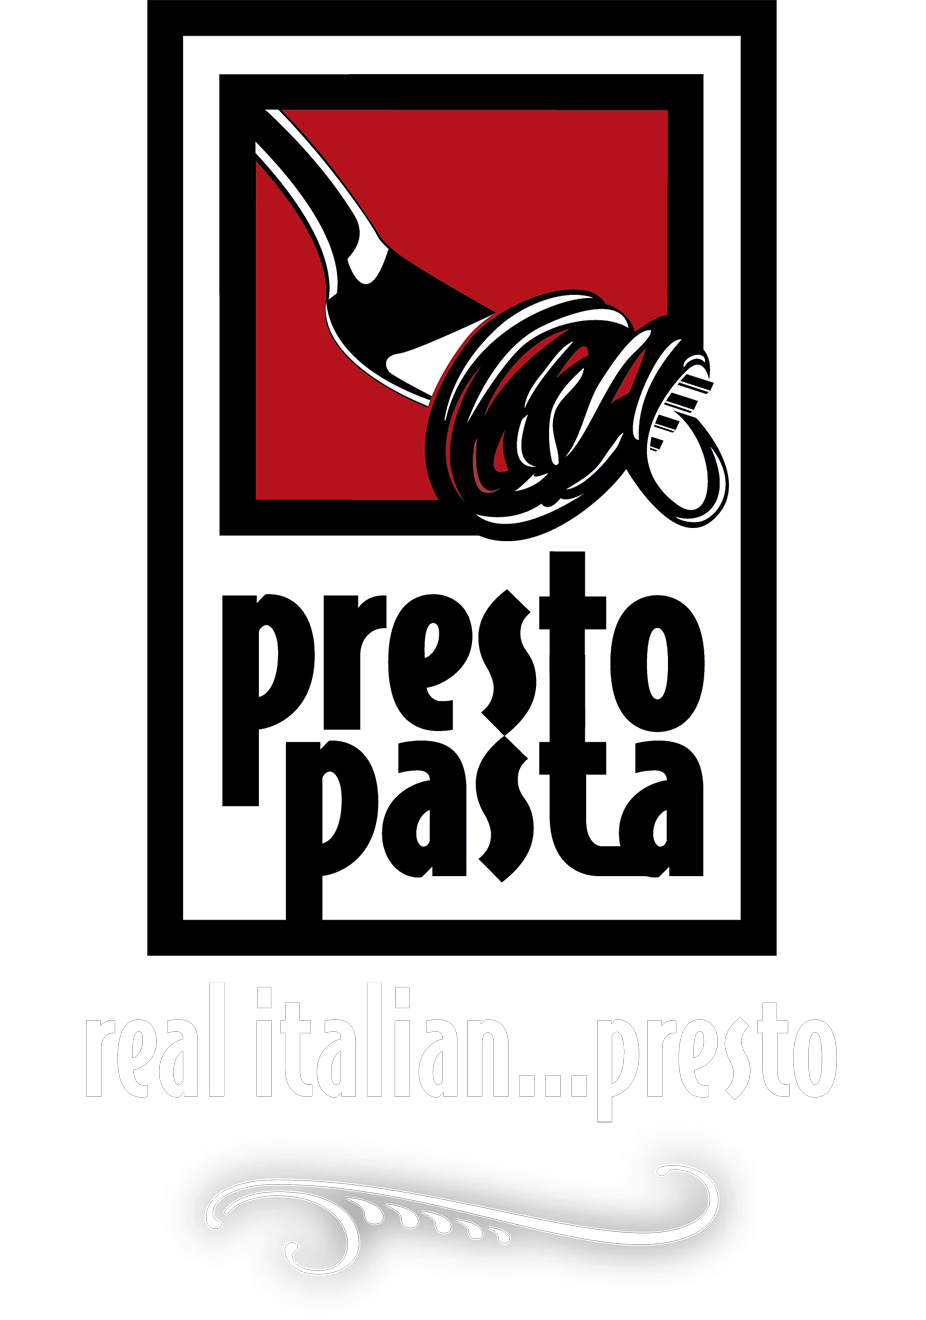 Pasta Logo - Presto Pasta. Real Italian. Presto!